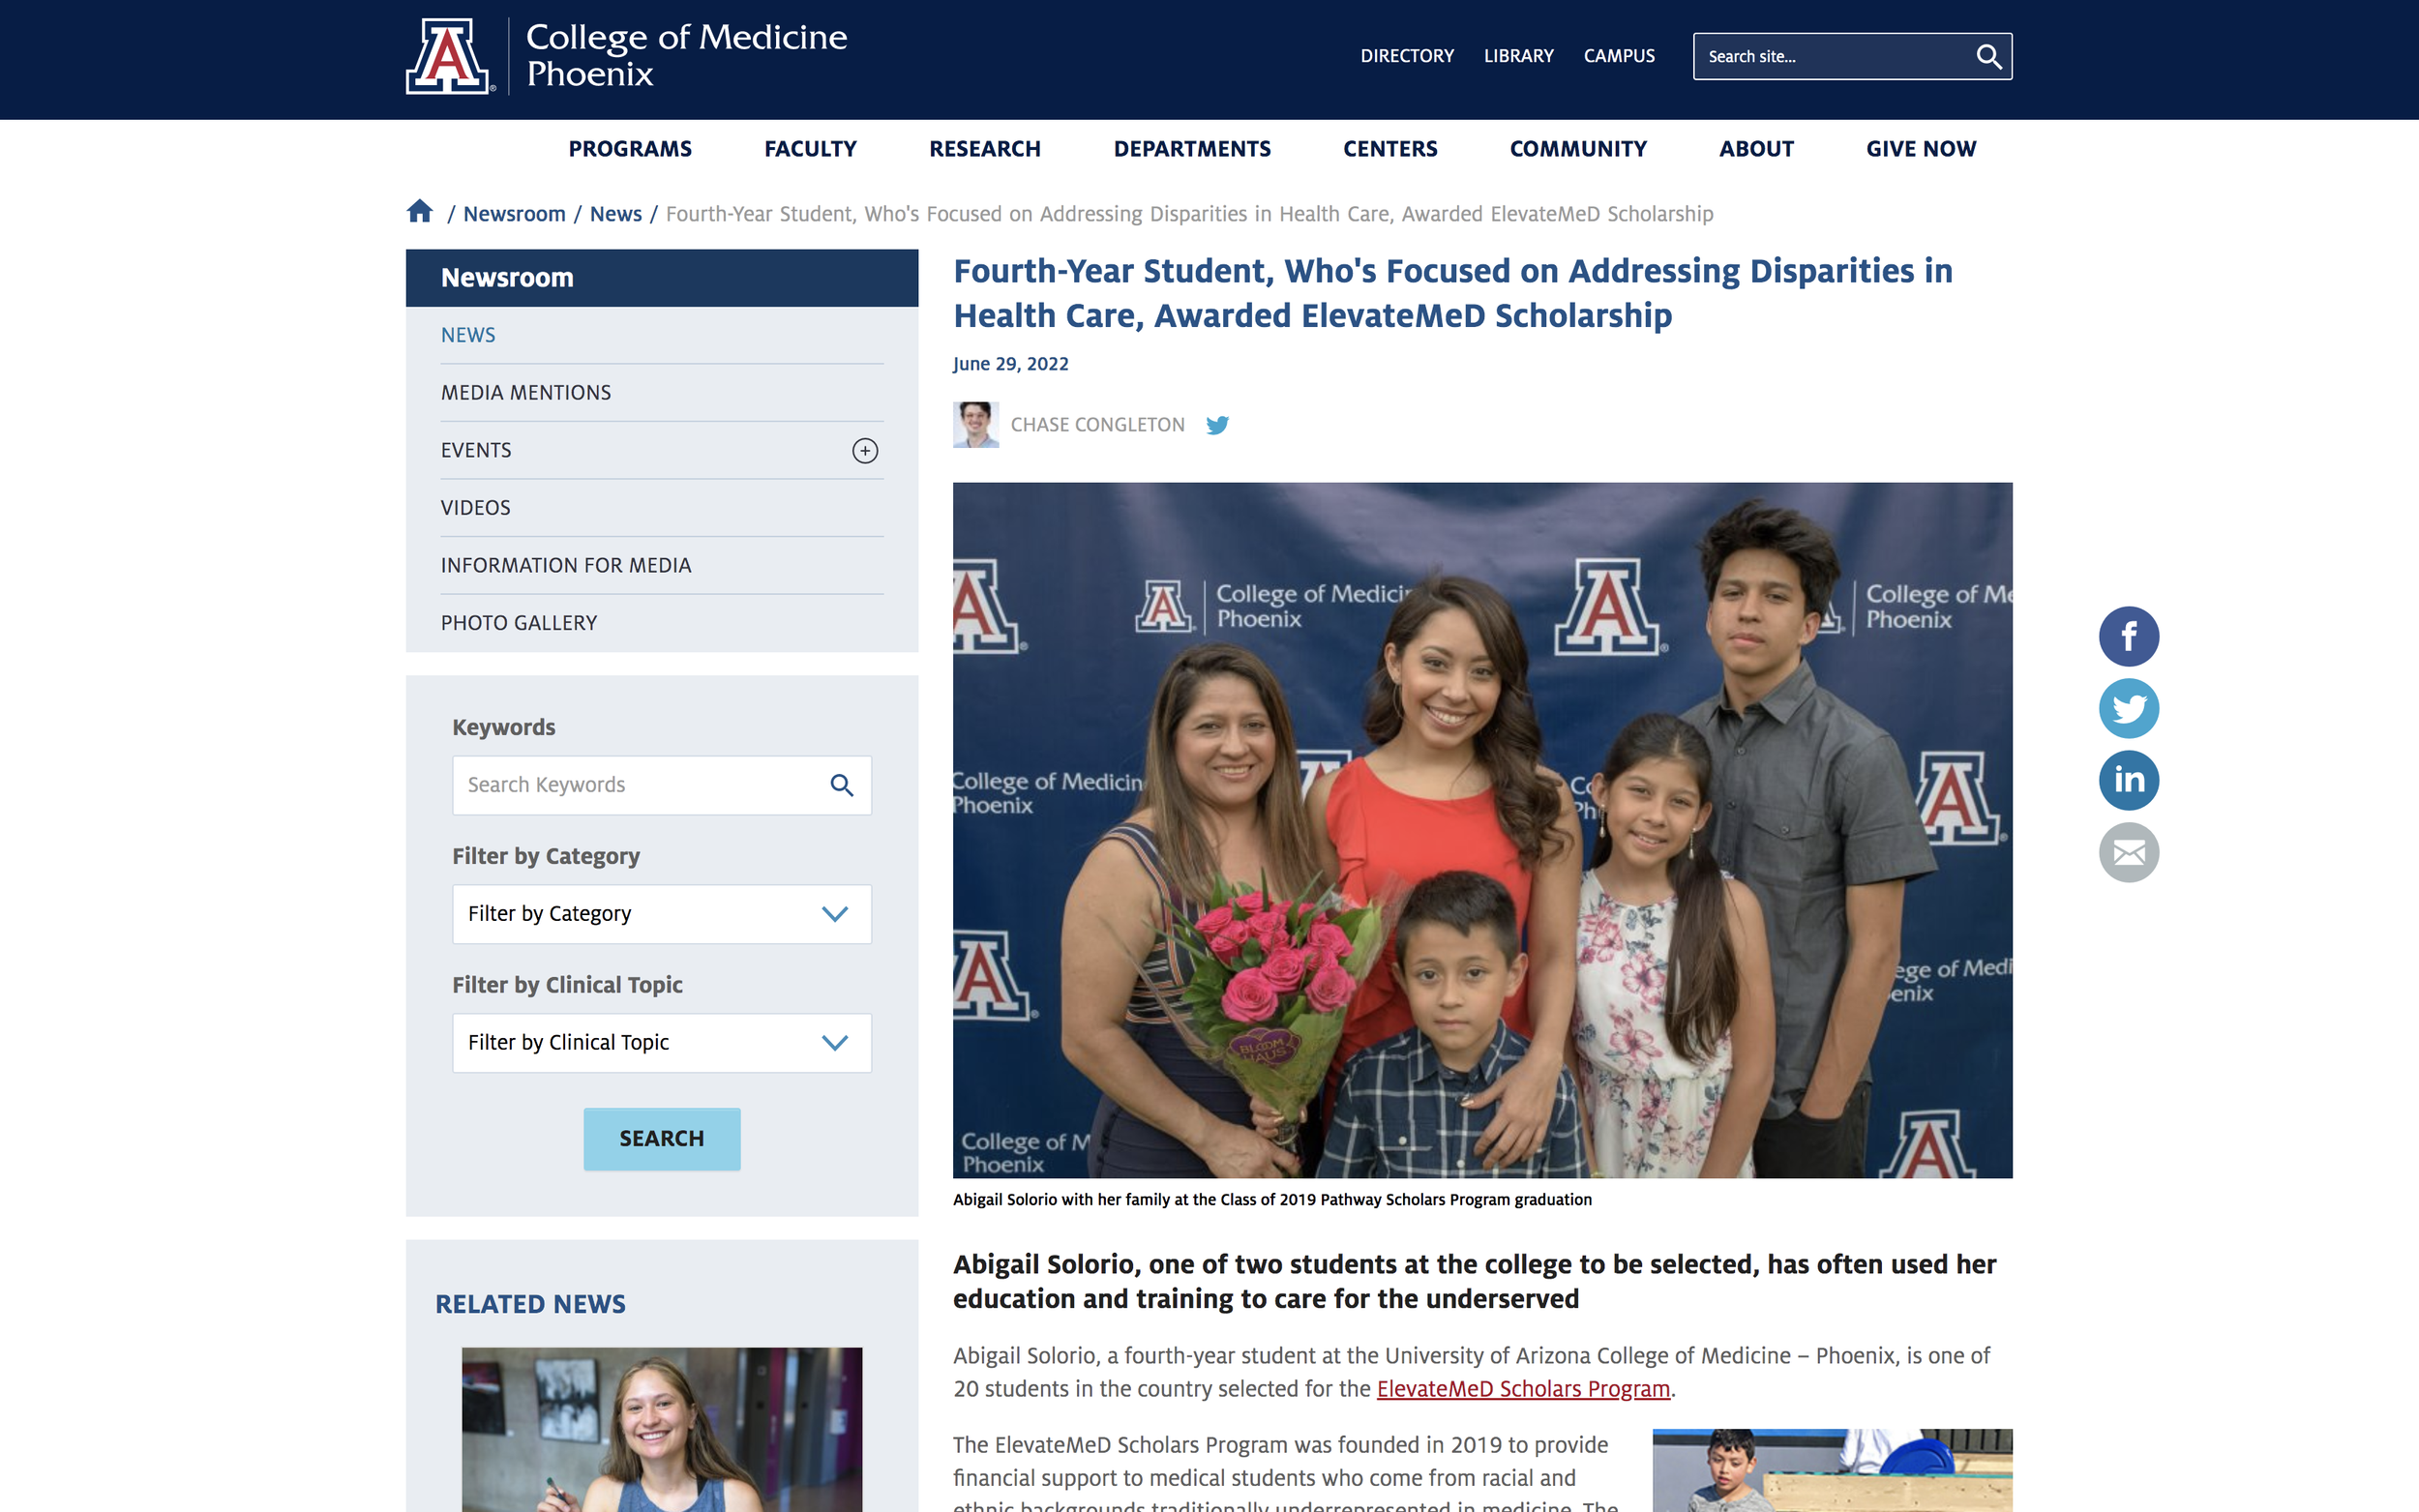 University of Arizona - Phoenix - ElevateMeD Scholar Abigail Solorio